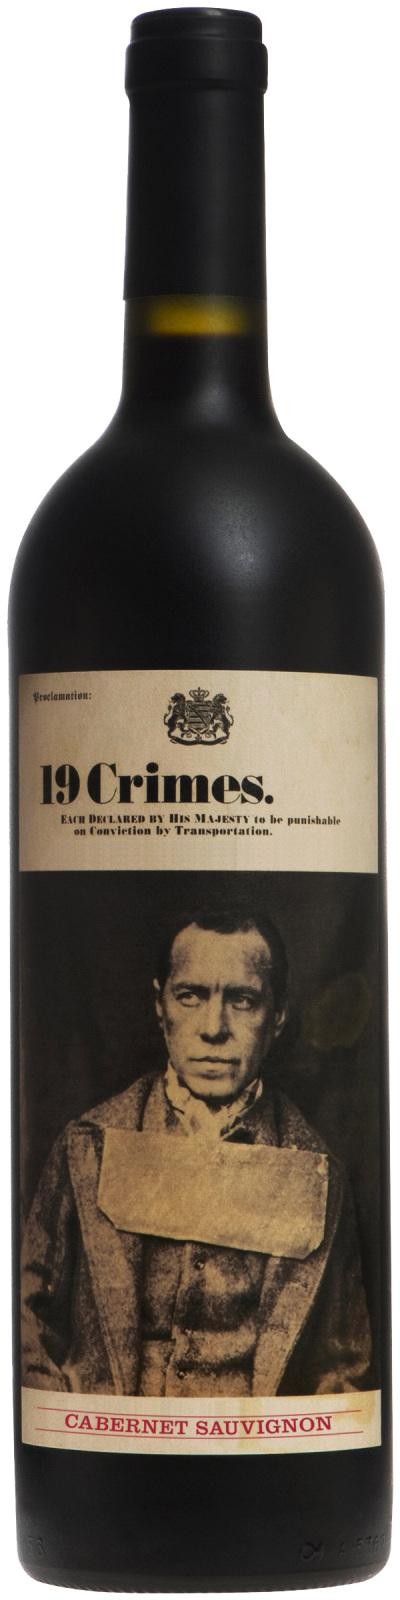 19 Crimes Life Sentence Cabernet Sauvignon - Red Wine from Australia - 750ml Bottle